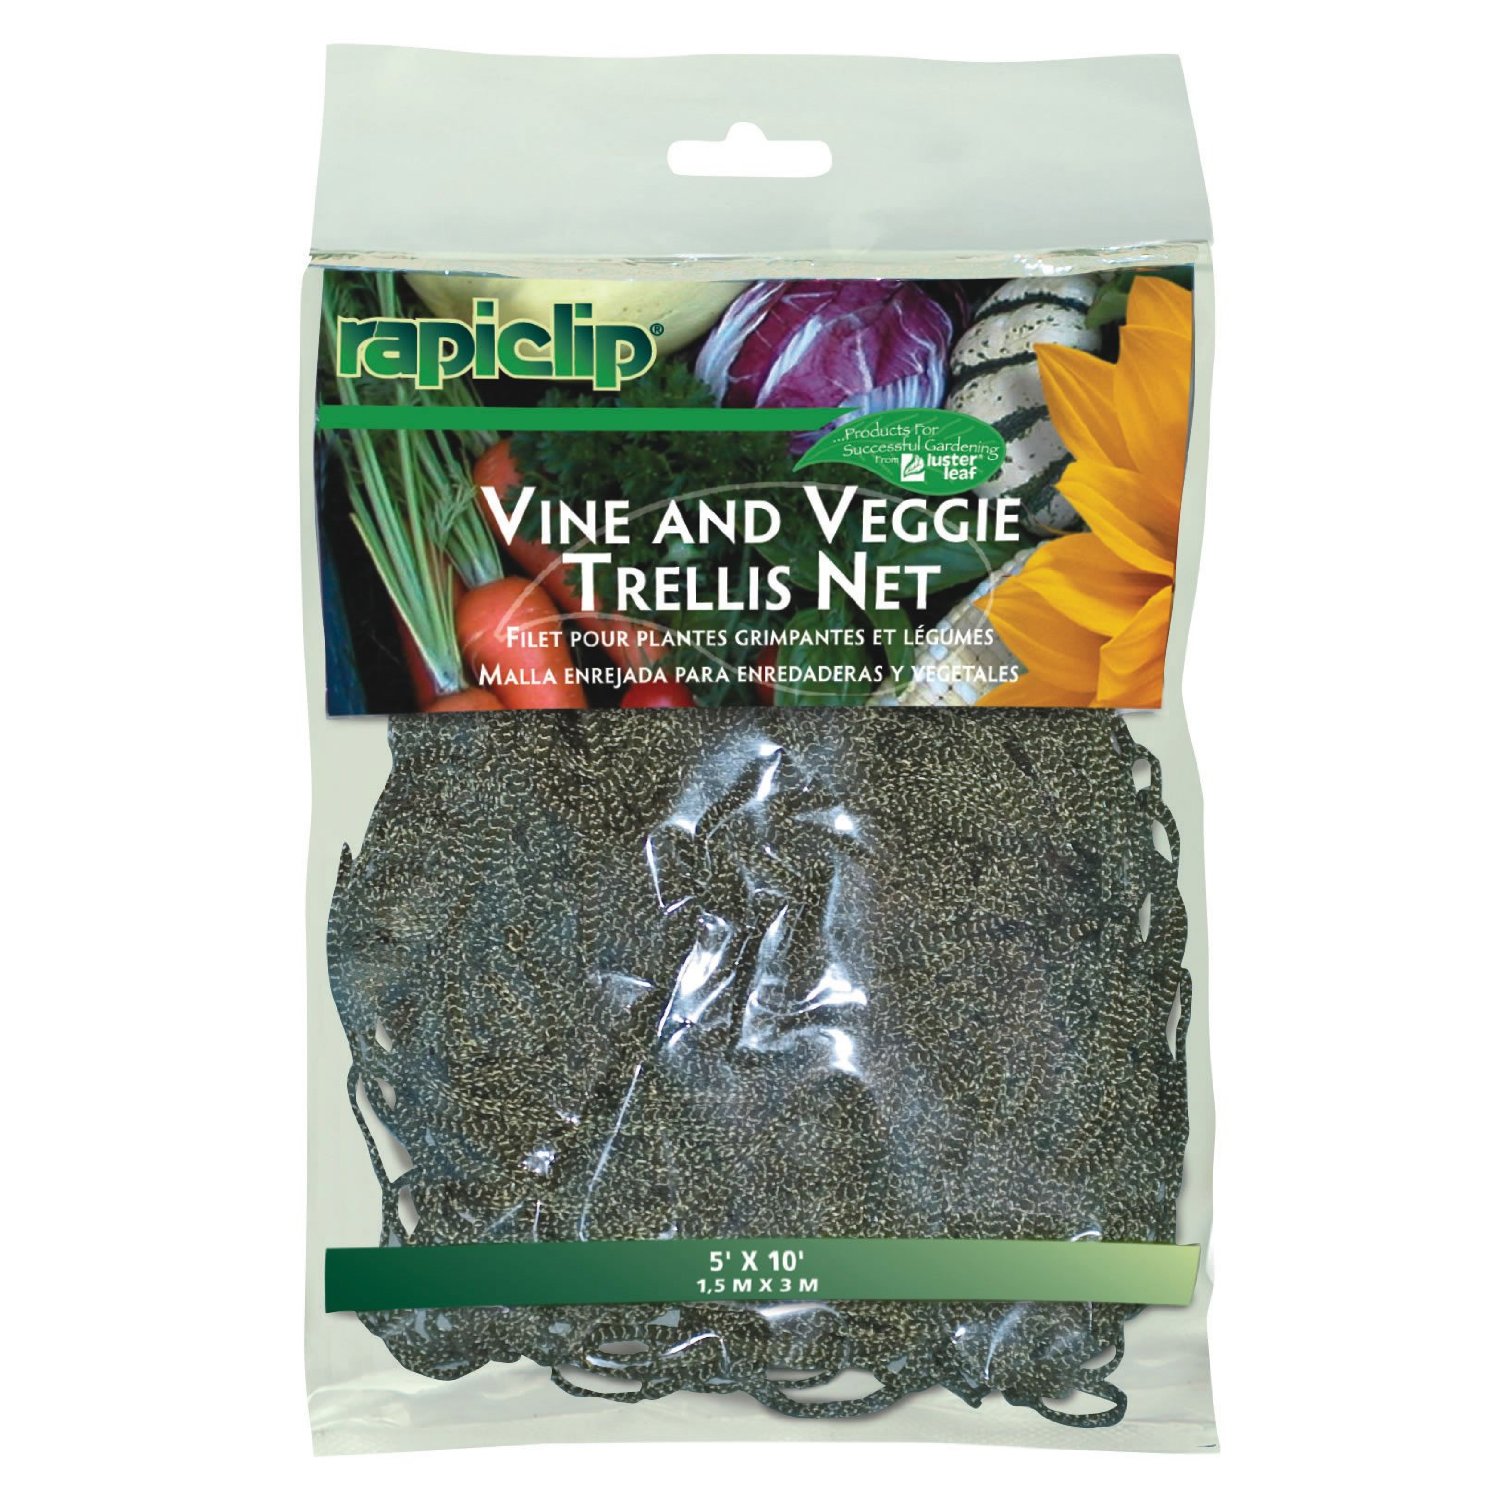 Luster Leaf Rapiclip Vine and Veggie Trellis Net, 5 ft. x 10 ft.